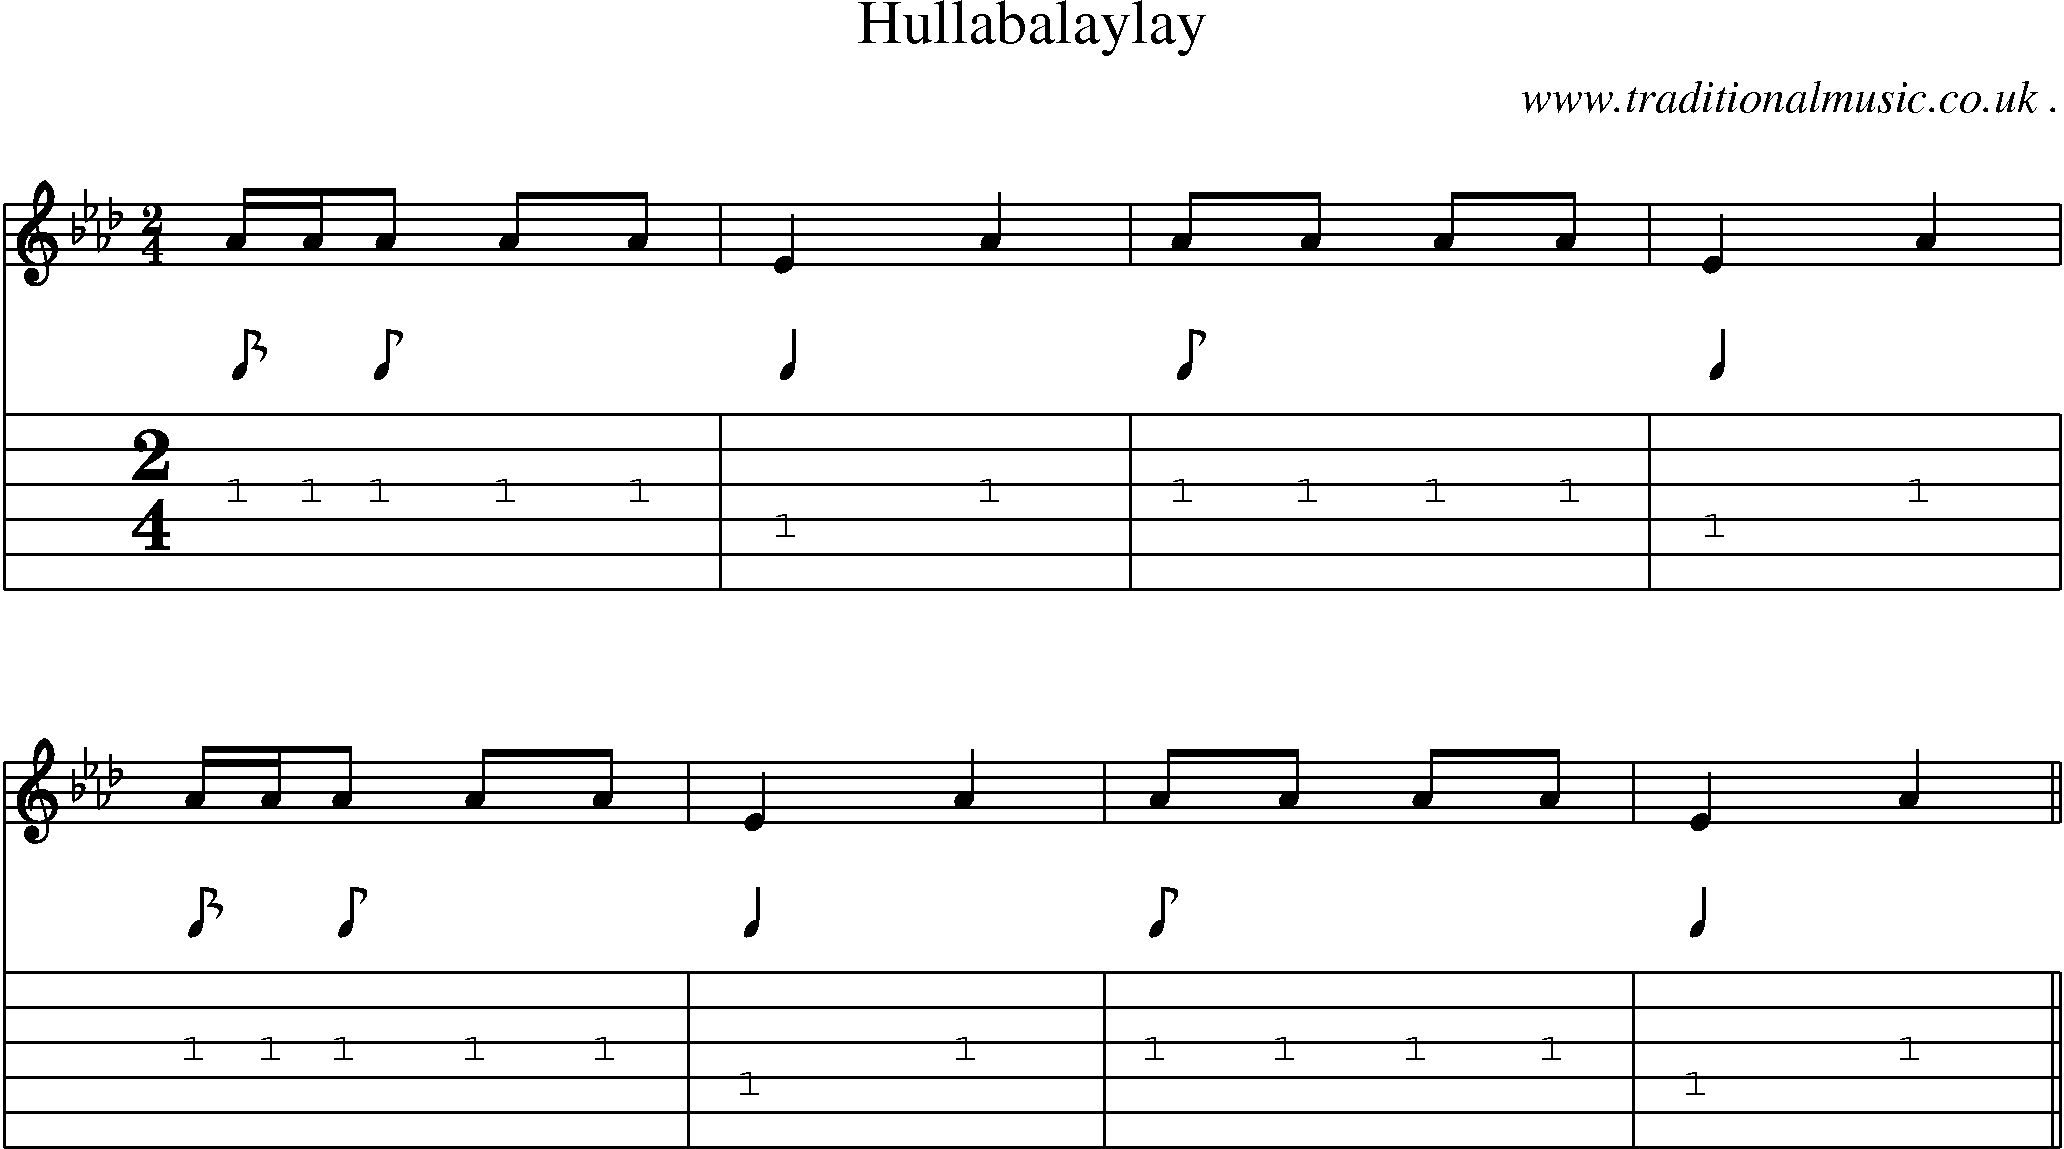 Sheet-Music and Guitar Tabs for Hullabalaylay